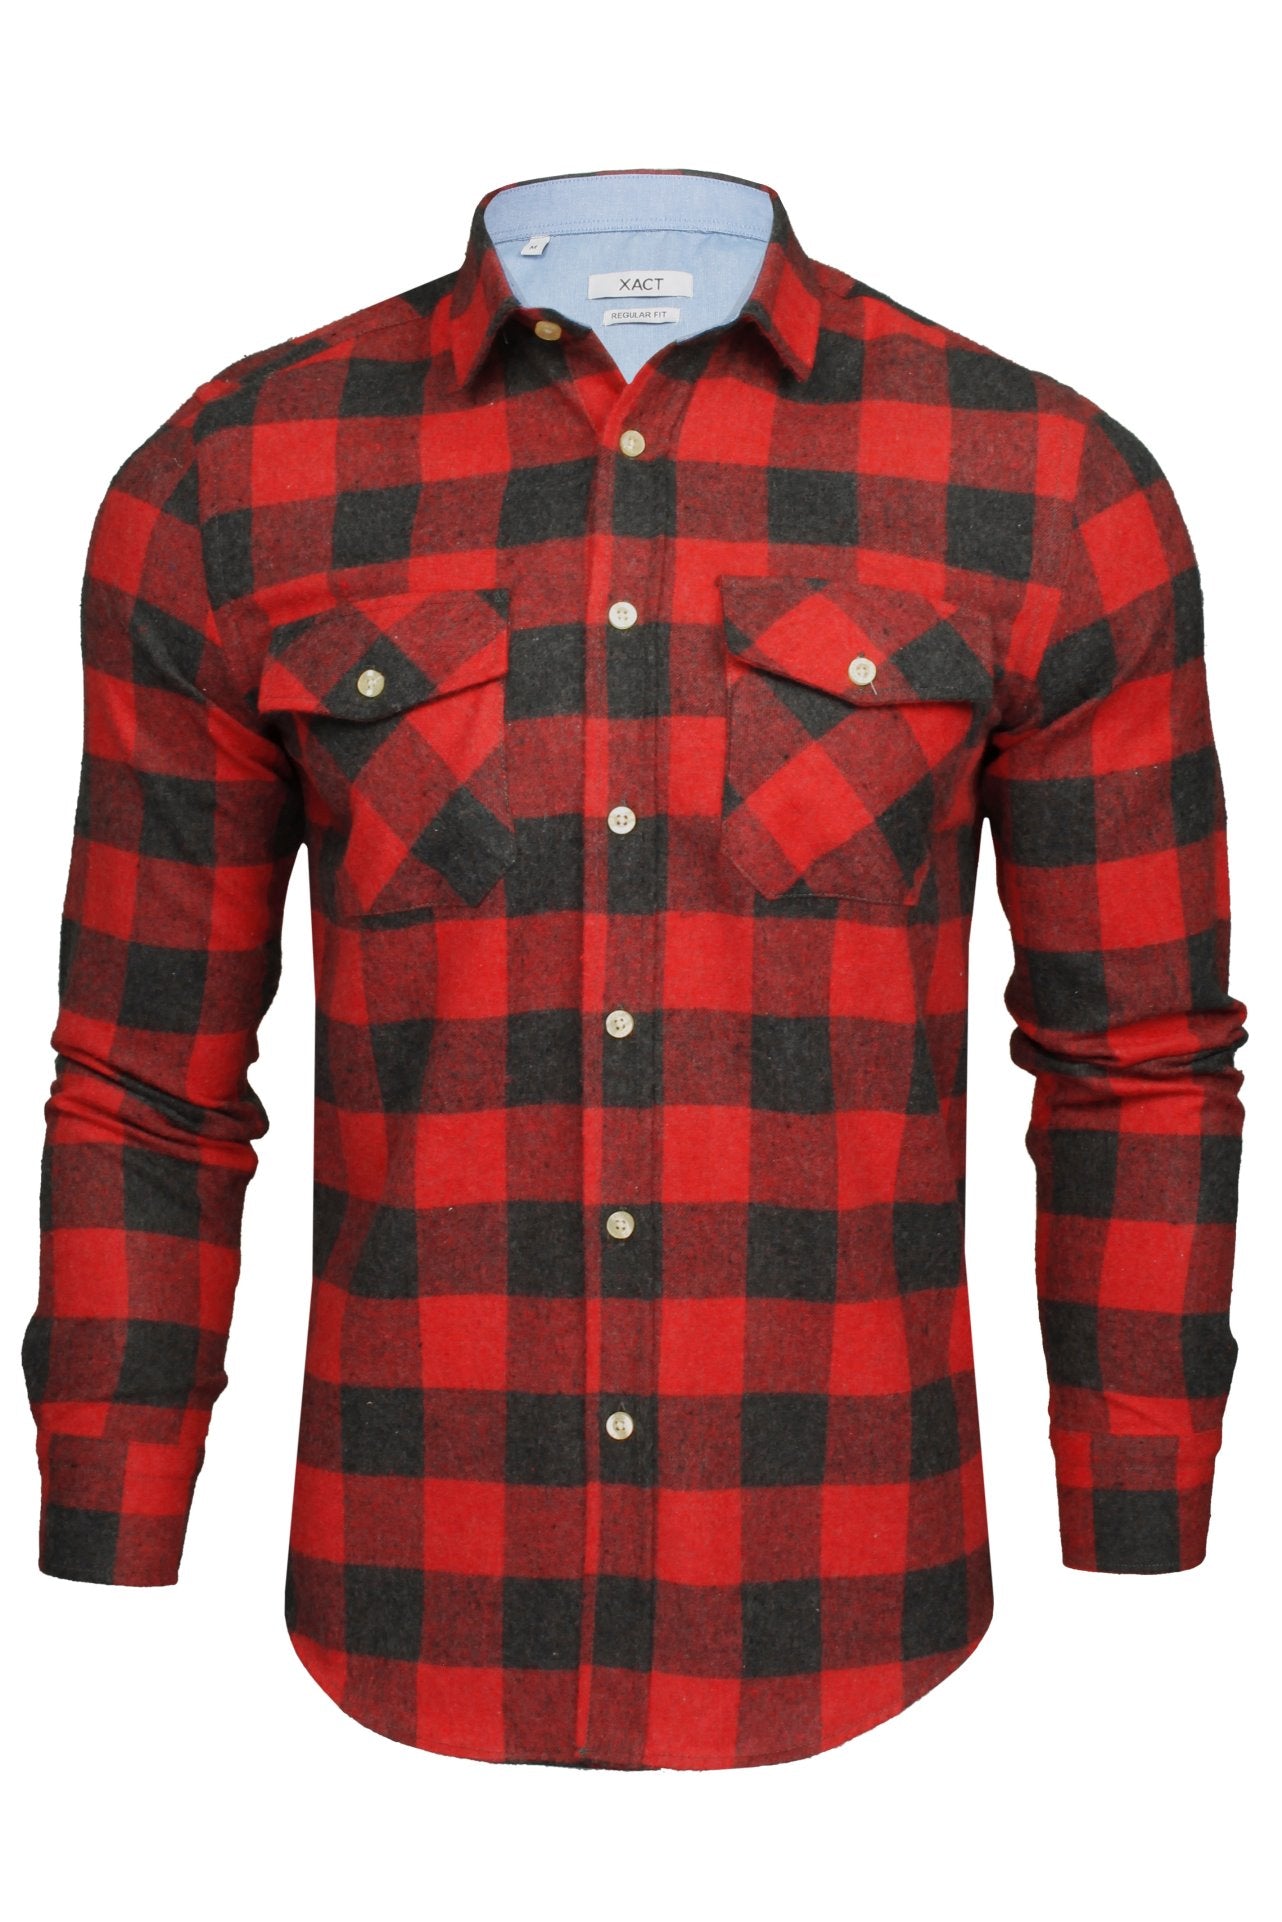 Xact Mens Soft Flannel Buffalo Check Shirt - Long Sleeved-Main Image